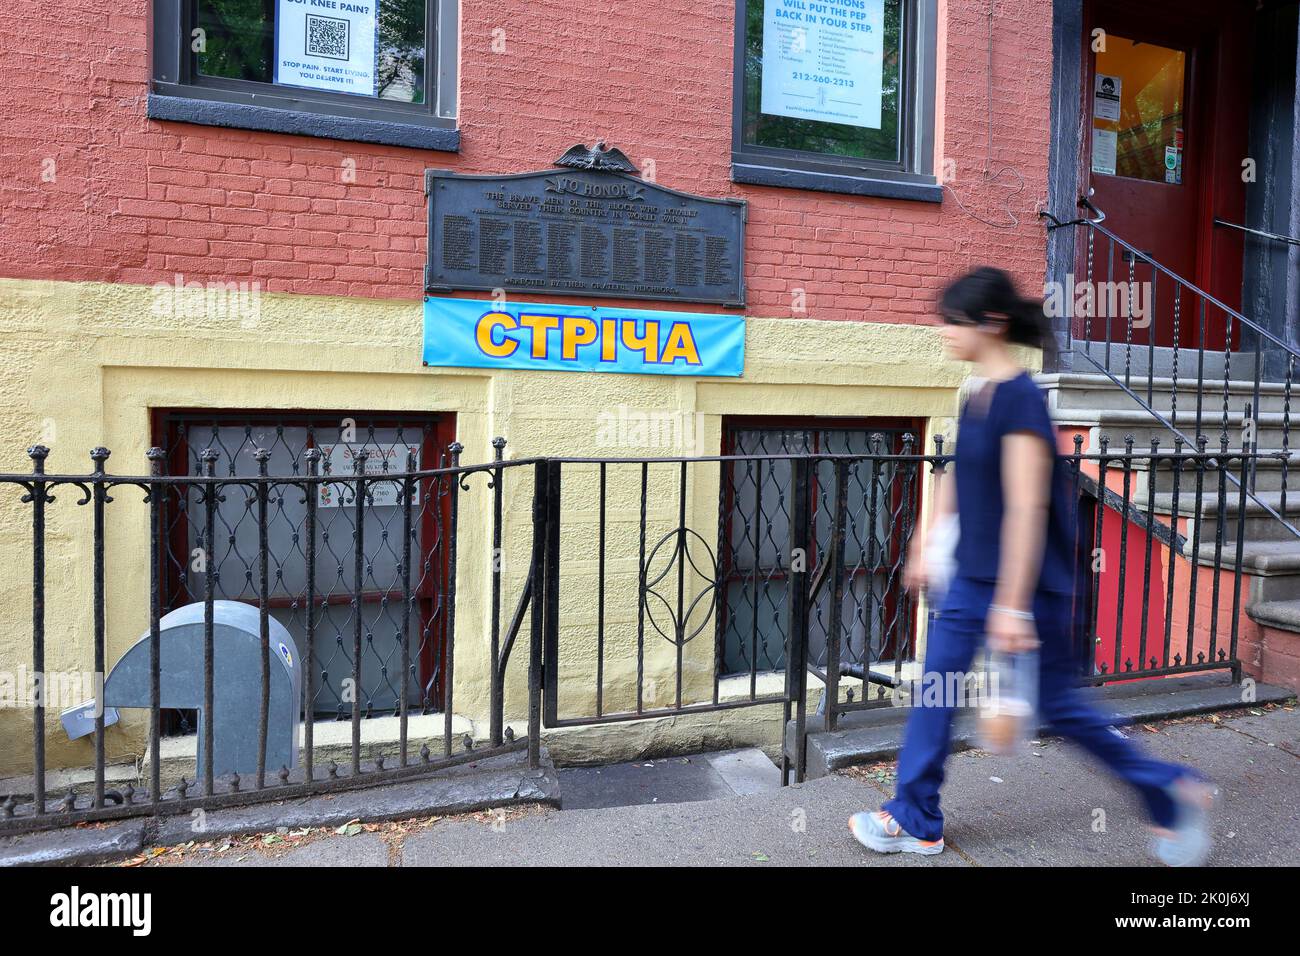 Streecha стріча, 33 E 7th St, Nueva York, Nueva York, Nueva York, Nueva York foto de un restaurante ucraniano en el barrio East Village de Manhattan. Foto de stock